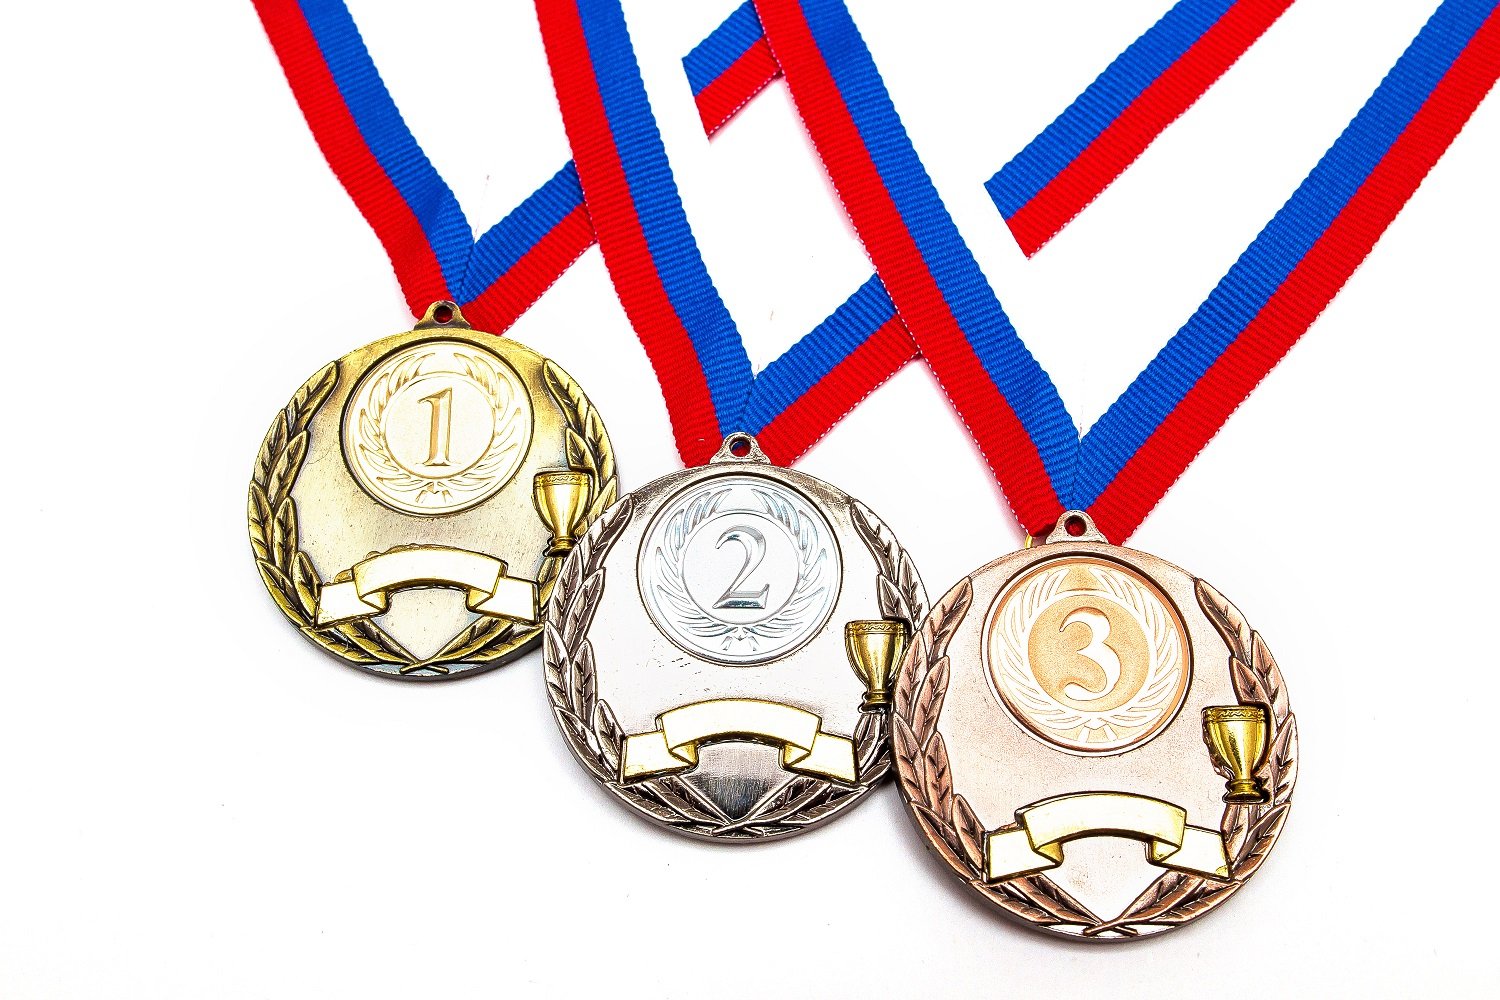 Sports medals. Медали спортивные. Спортивные награды. Спортивные награды медали. Медали наградные спортивные.